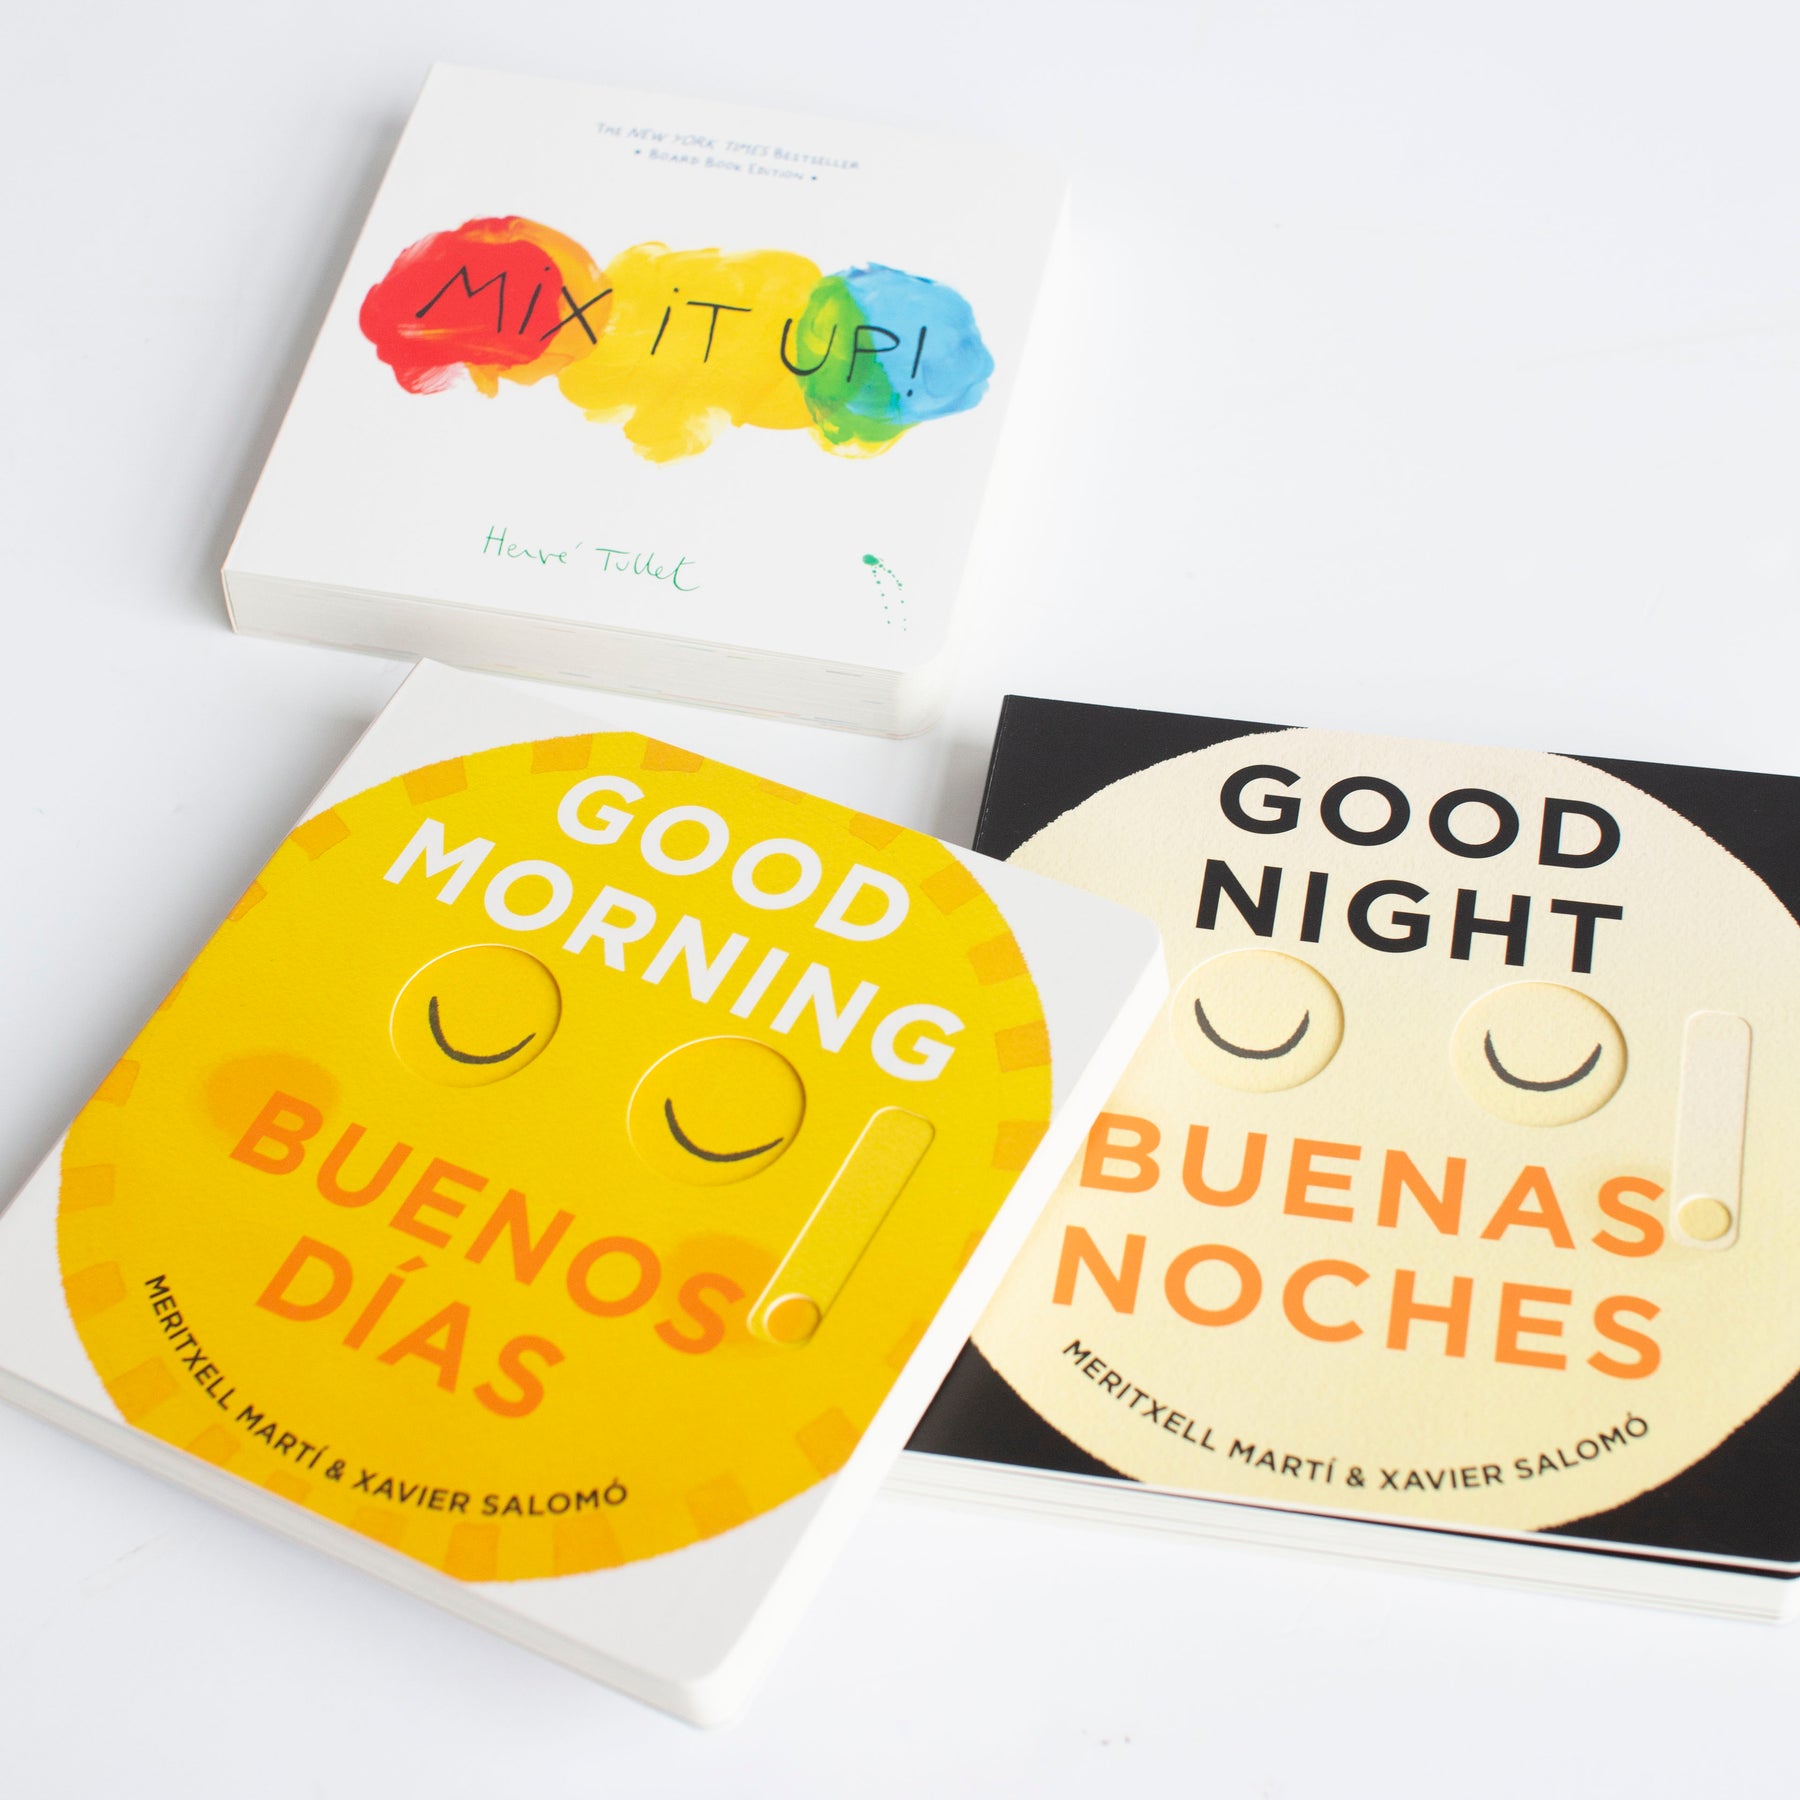 Buenas noches art - spanish greetings - Good evening good night